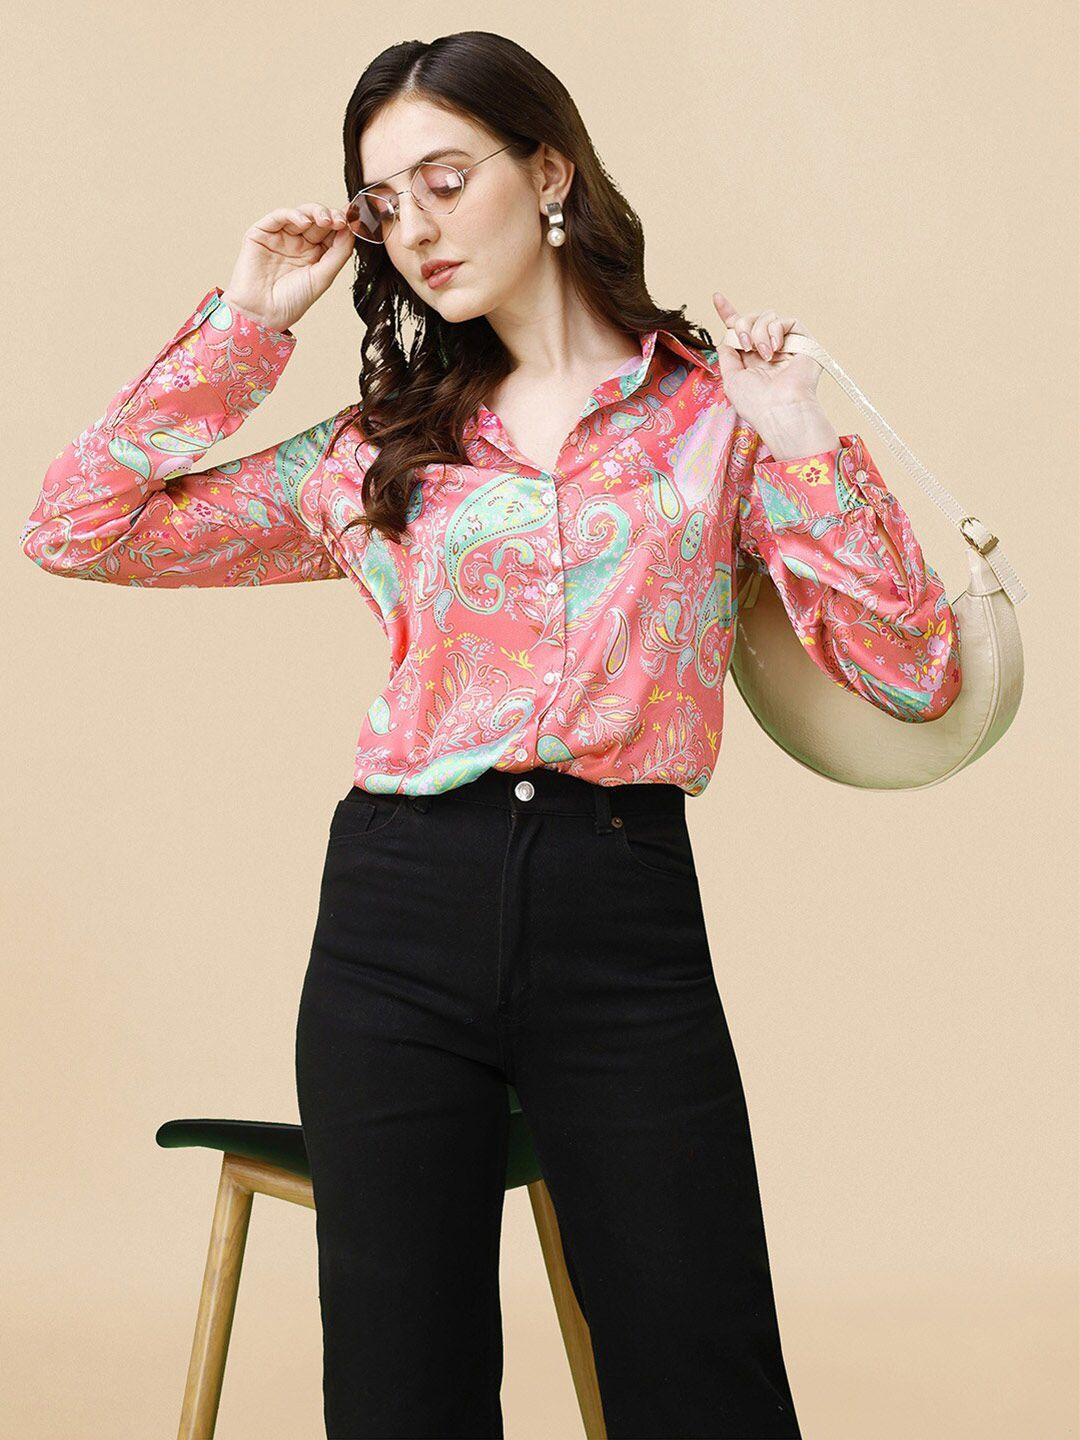 mirchi-fashion-women-peach-coloured-relaxed-floral-opaque-printed-casual-shirt